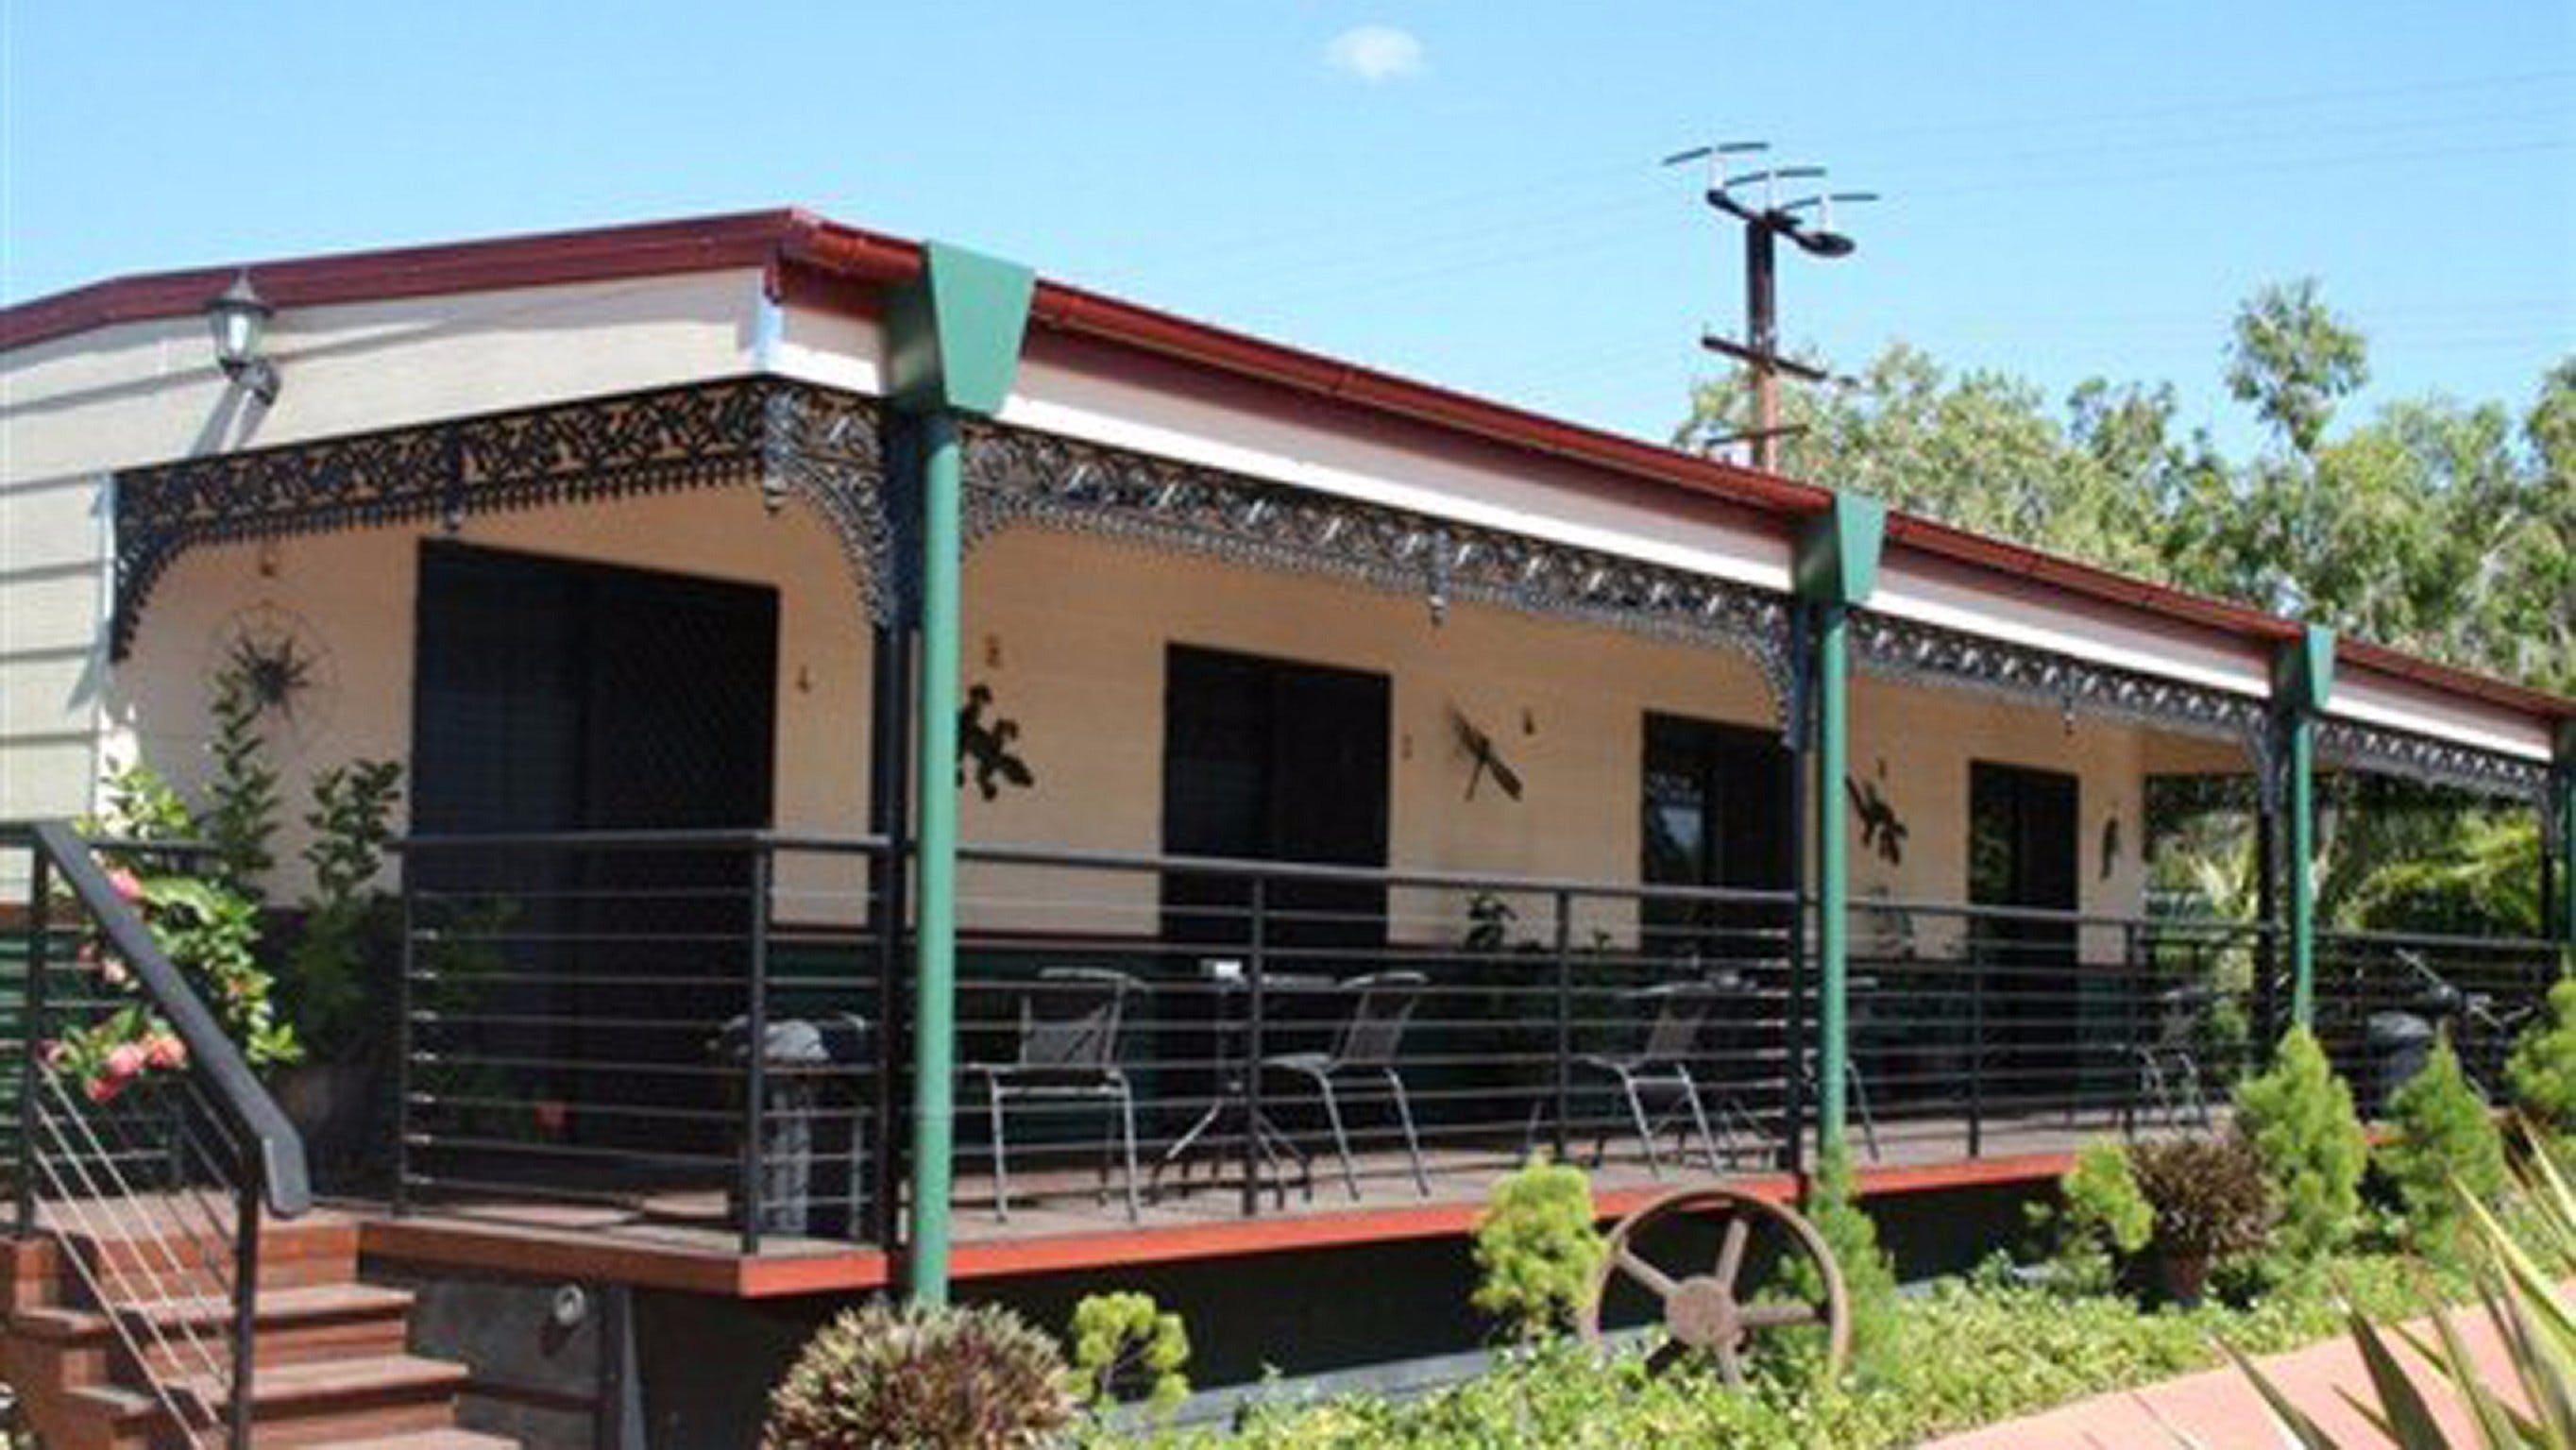 Pine Creek Railway Resort - Wagga Wagga Accommodation